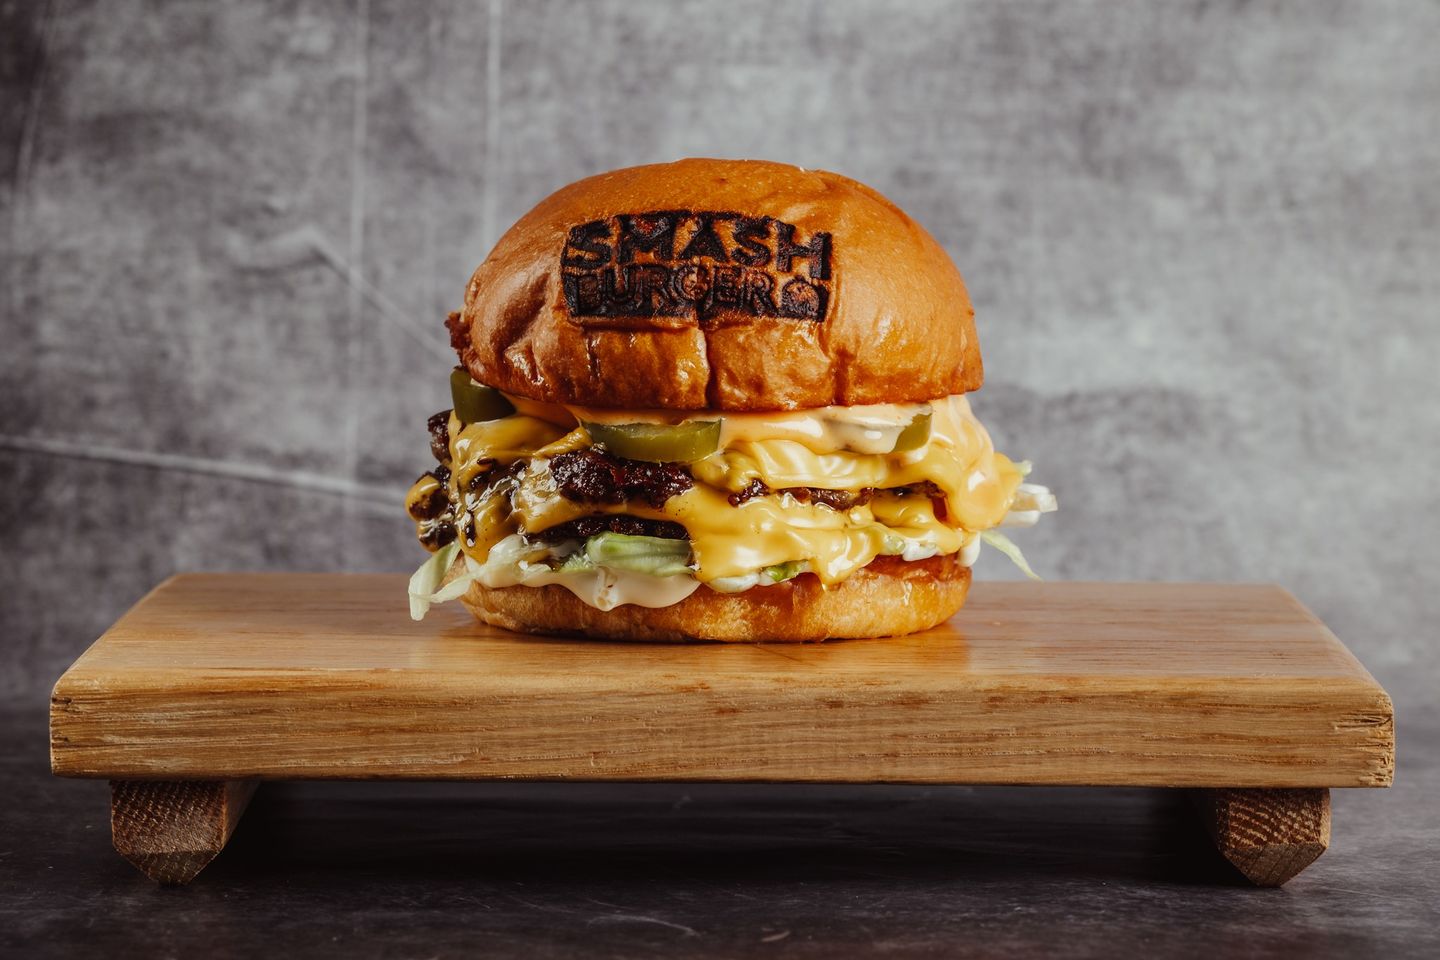 Smash Burger: To νέο hot speakeasy burger spot της πόλης δια χειρός Τάσου Αντωνίου